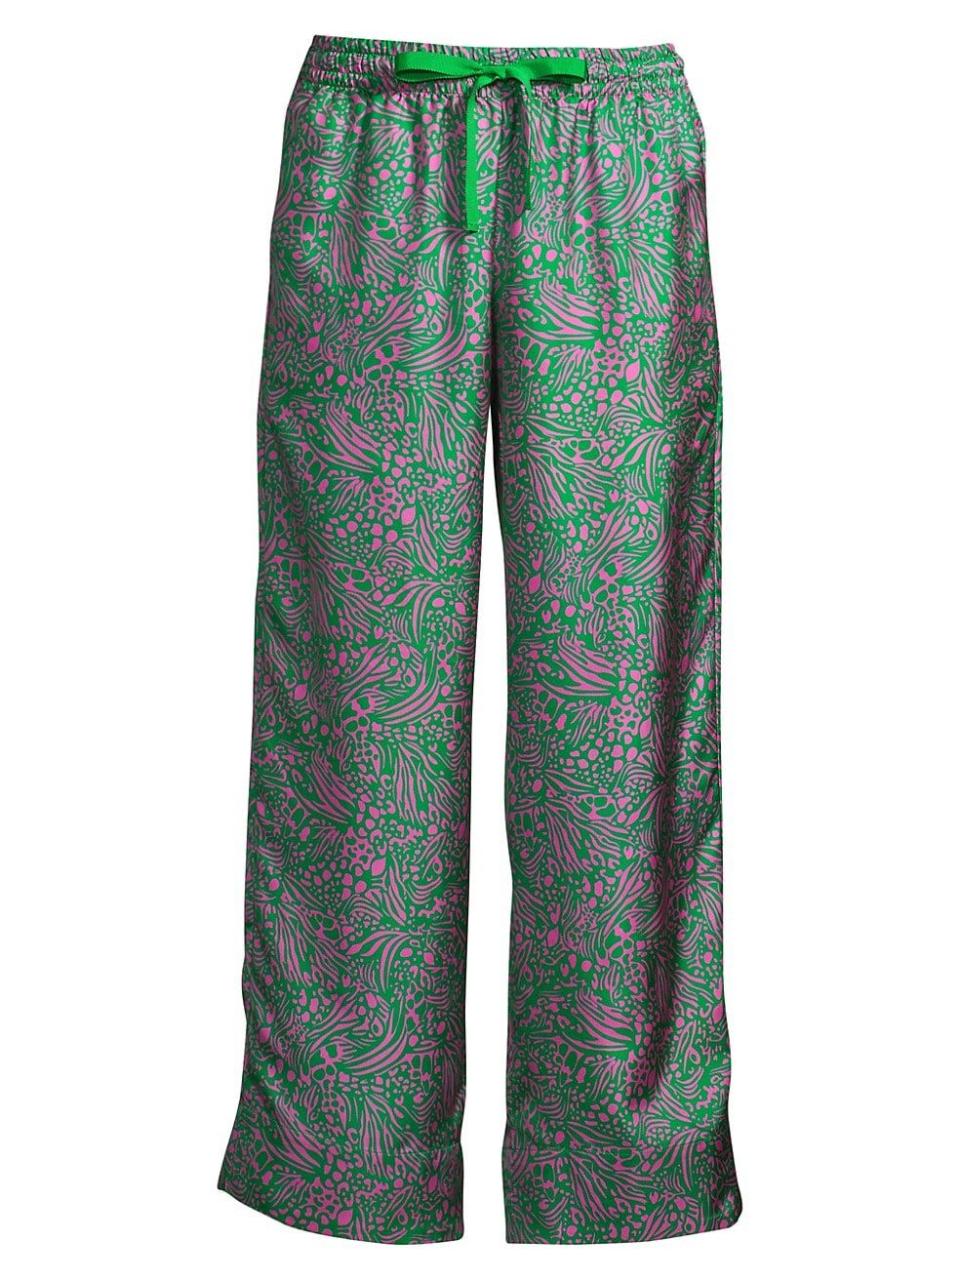 8) Printed Silk Pajama Pants